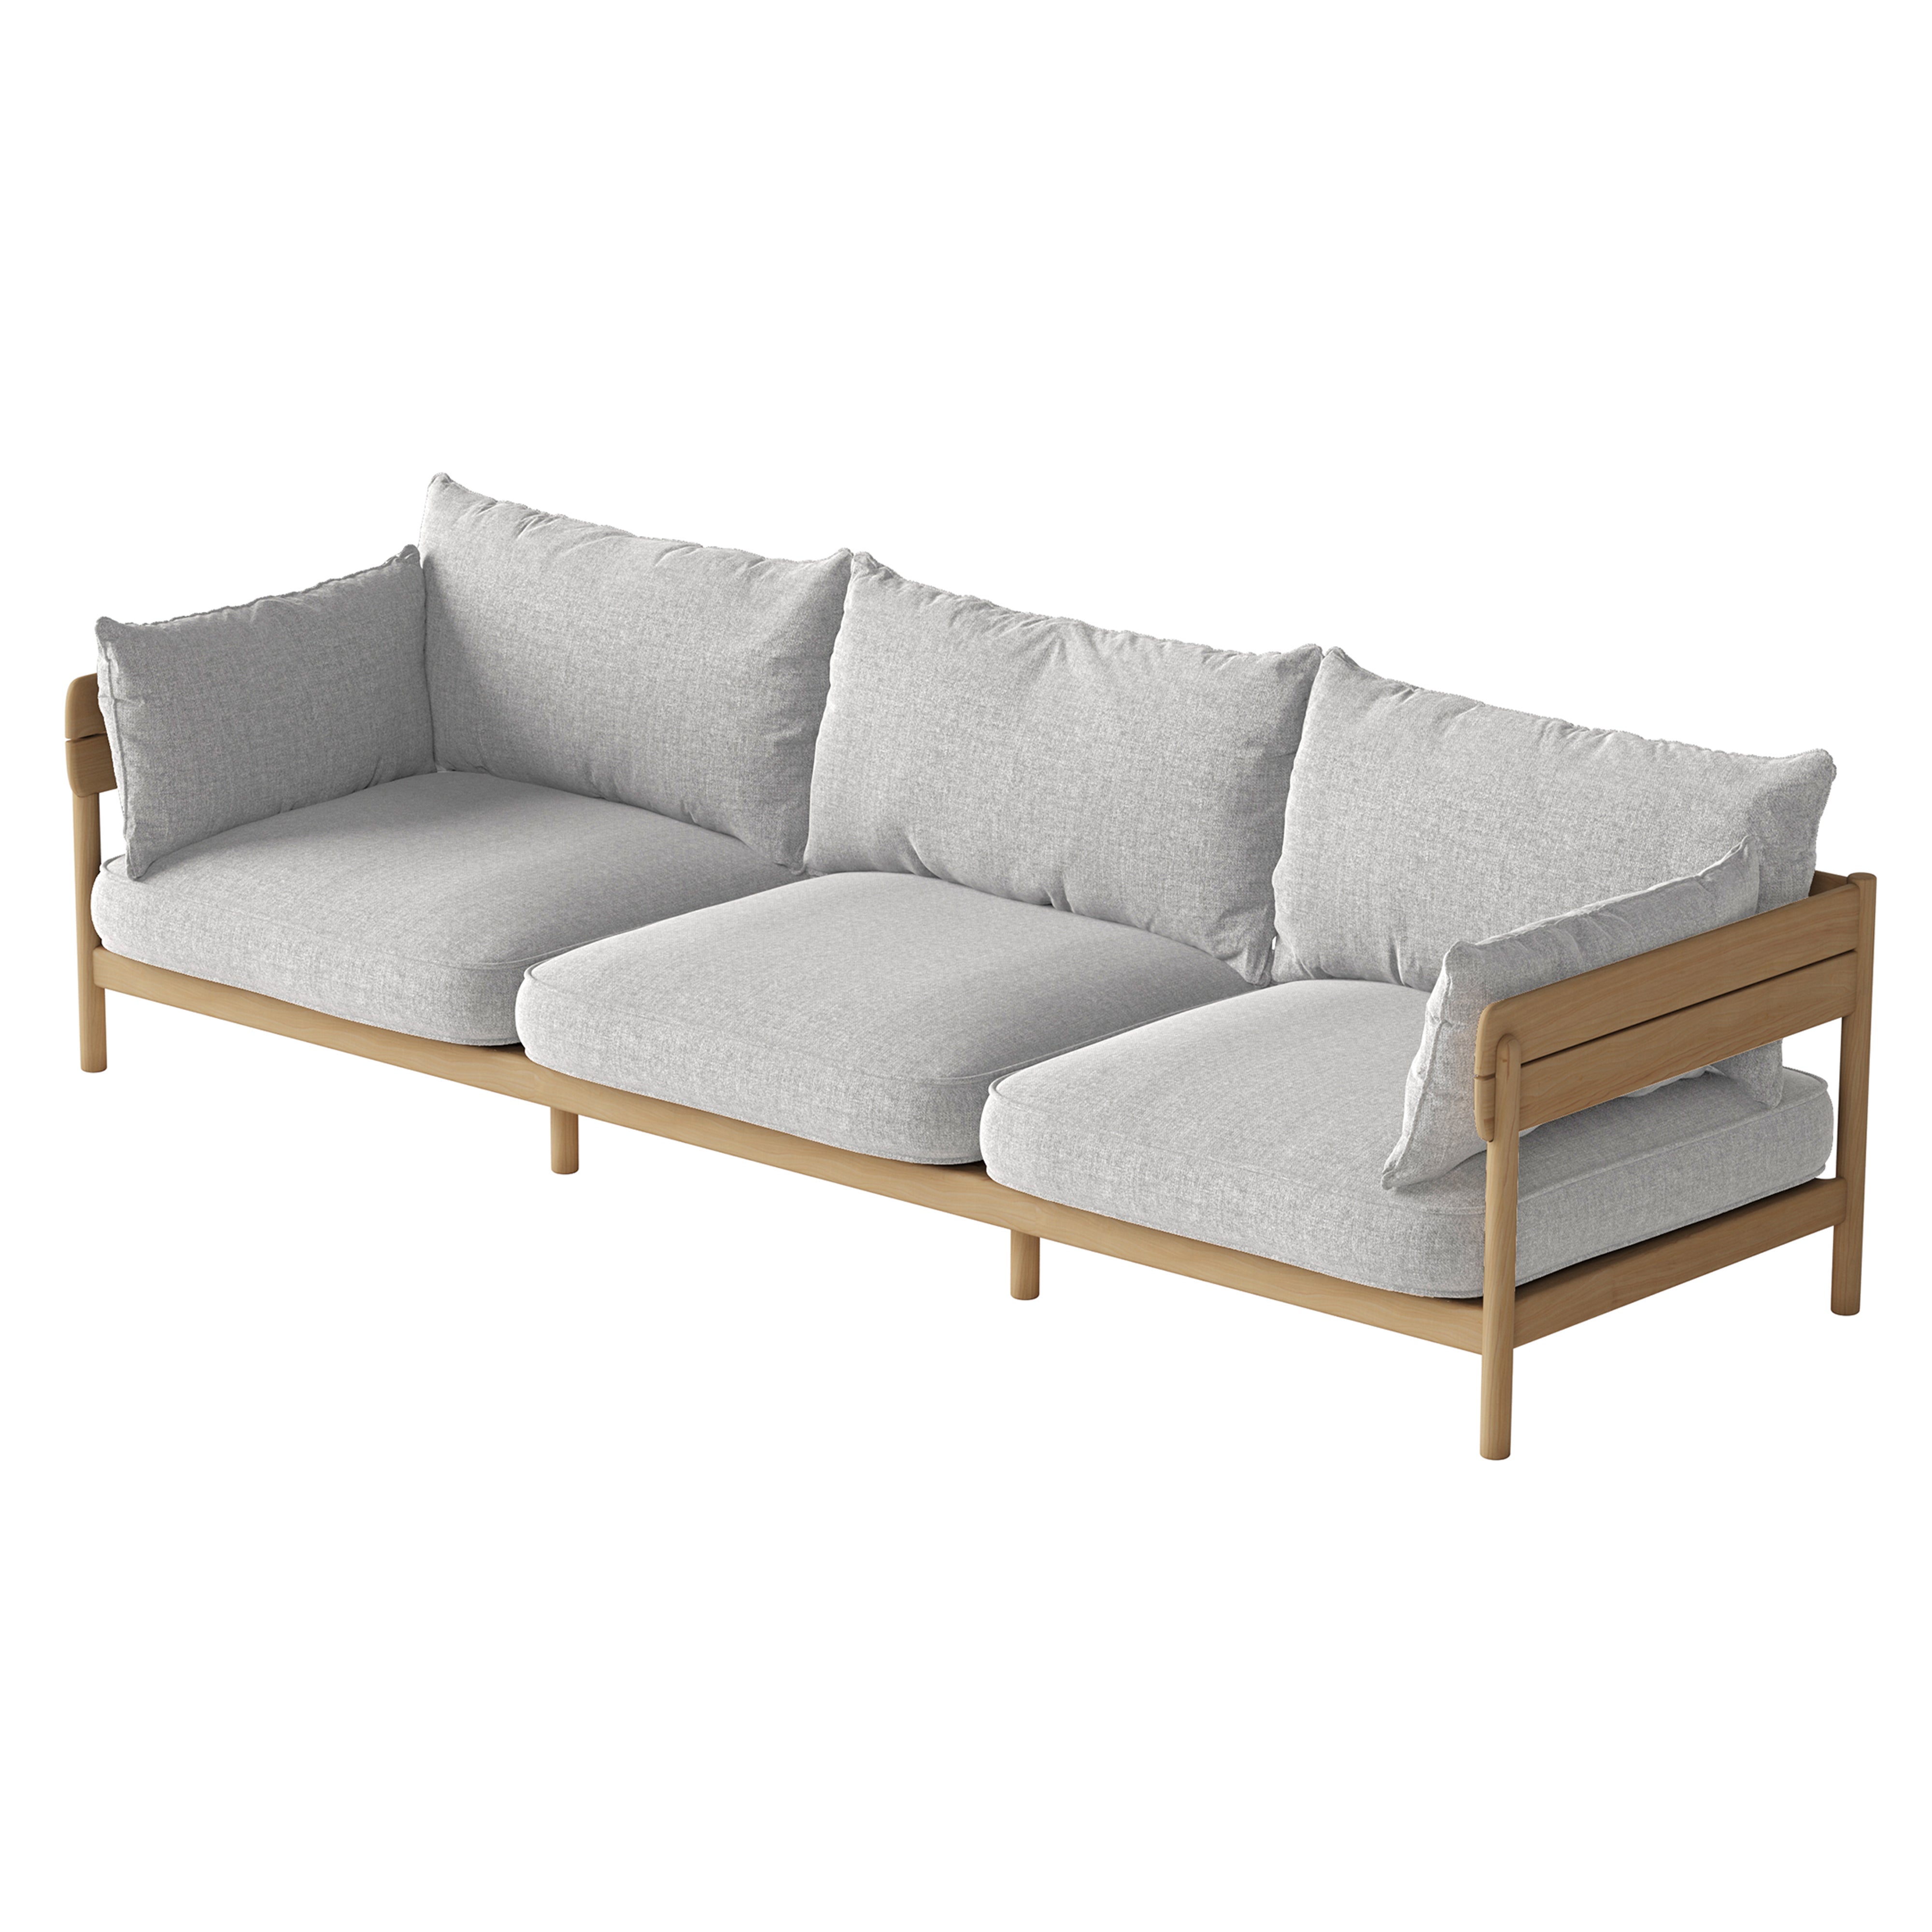 Tanso Sofa: 3 Seater